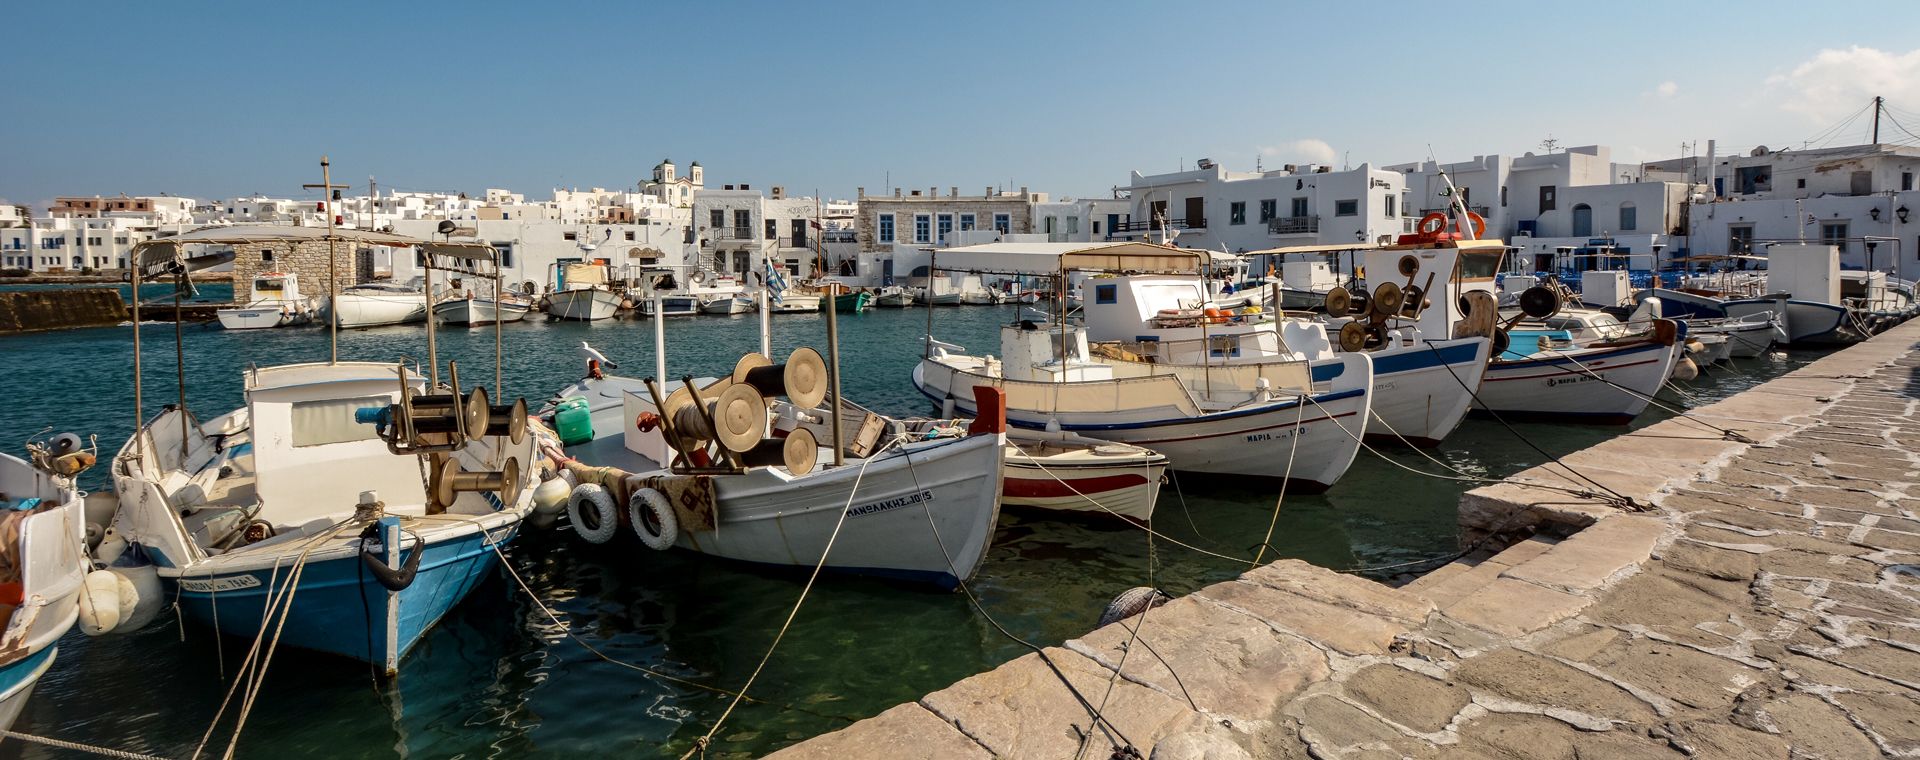 Naxos, Paros : voyage en famille 